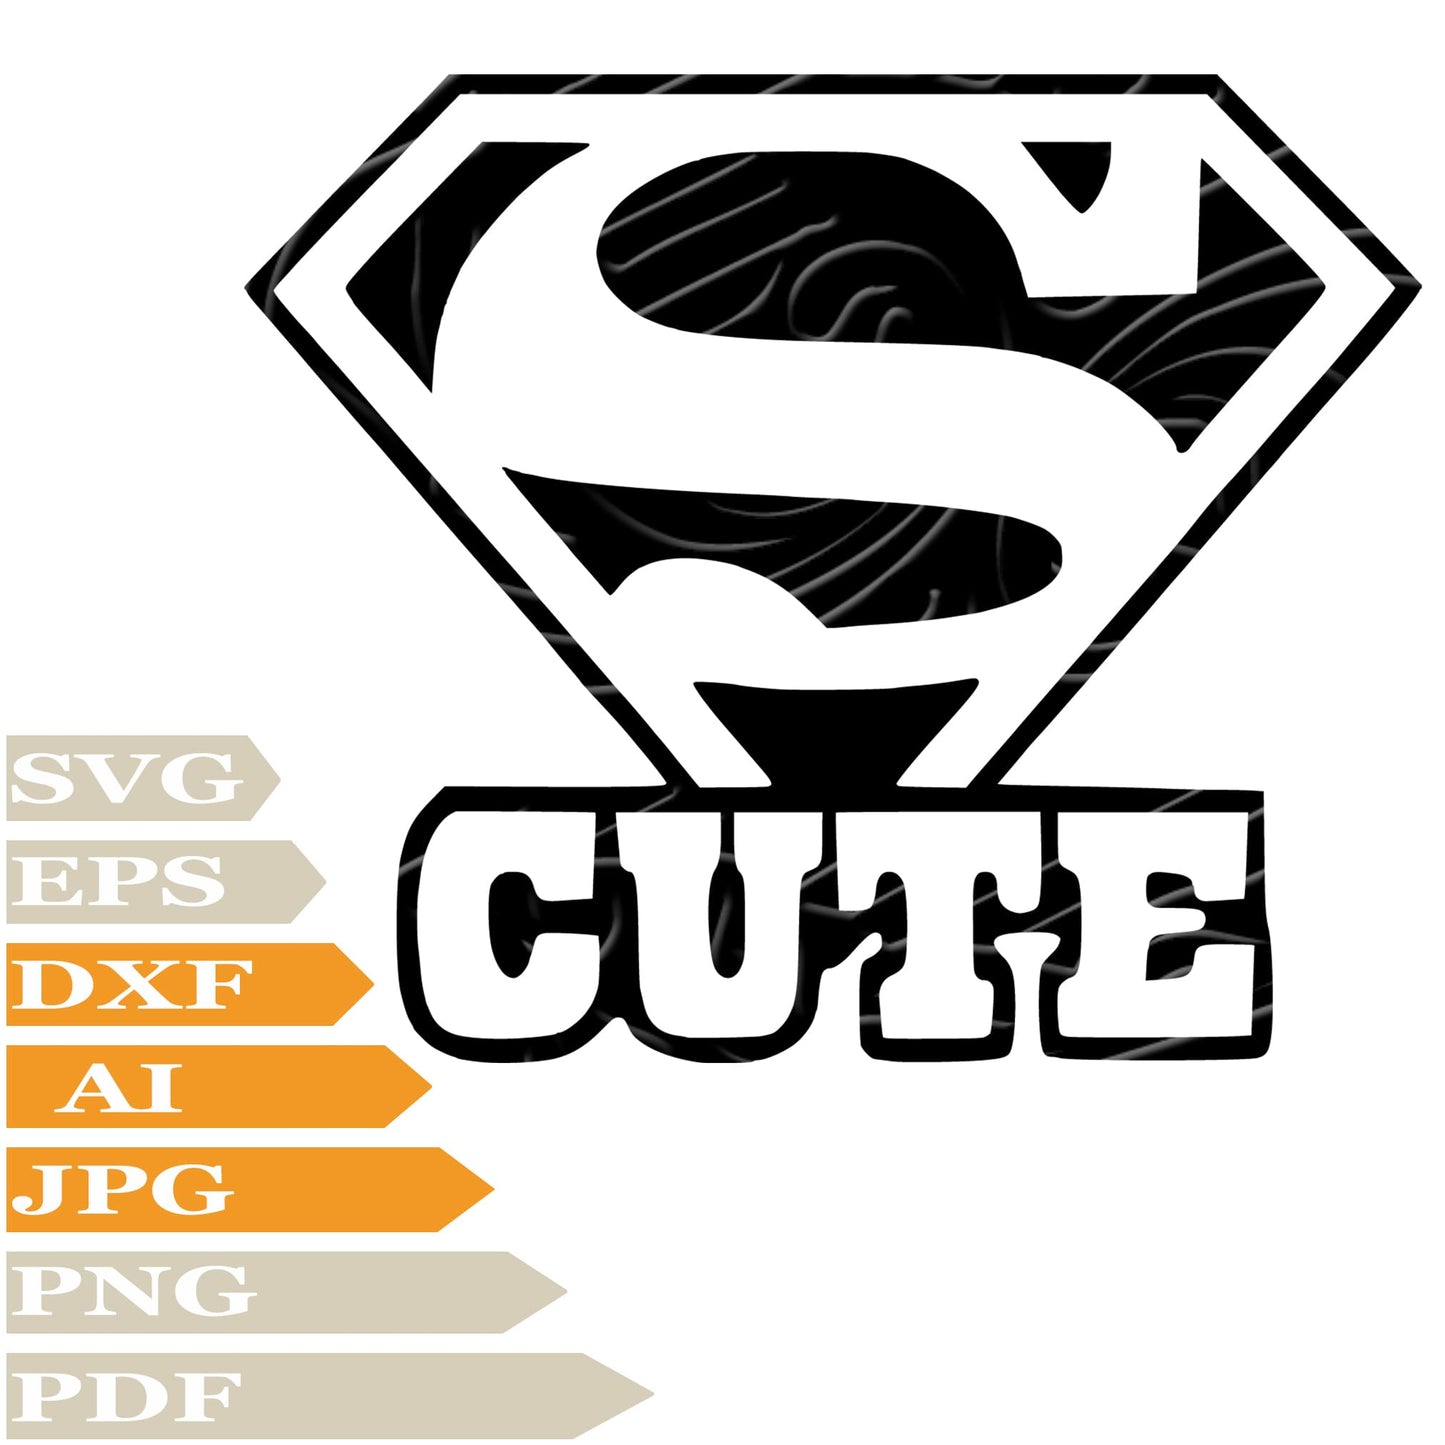 Super SVG-Superman Logo Personalized SVG-Super Family Drawing SVG-Super Vector Illustration-PNG-Decal-Cricut-Digital Files-Clip Art-Cut File-For Shirts-Silhouette